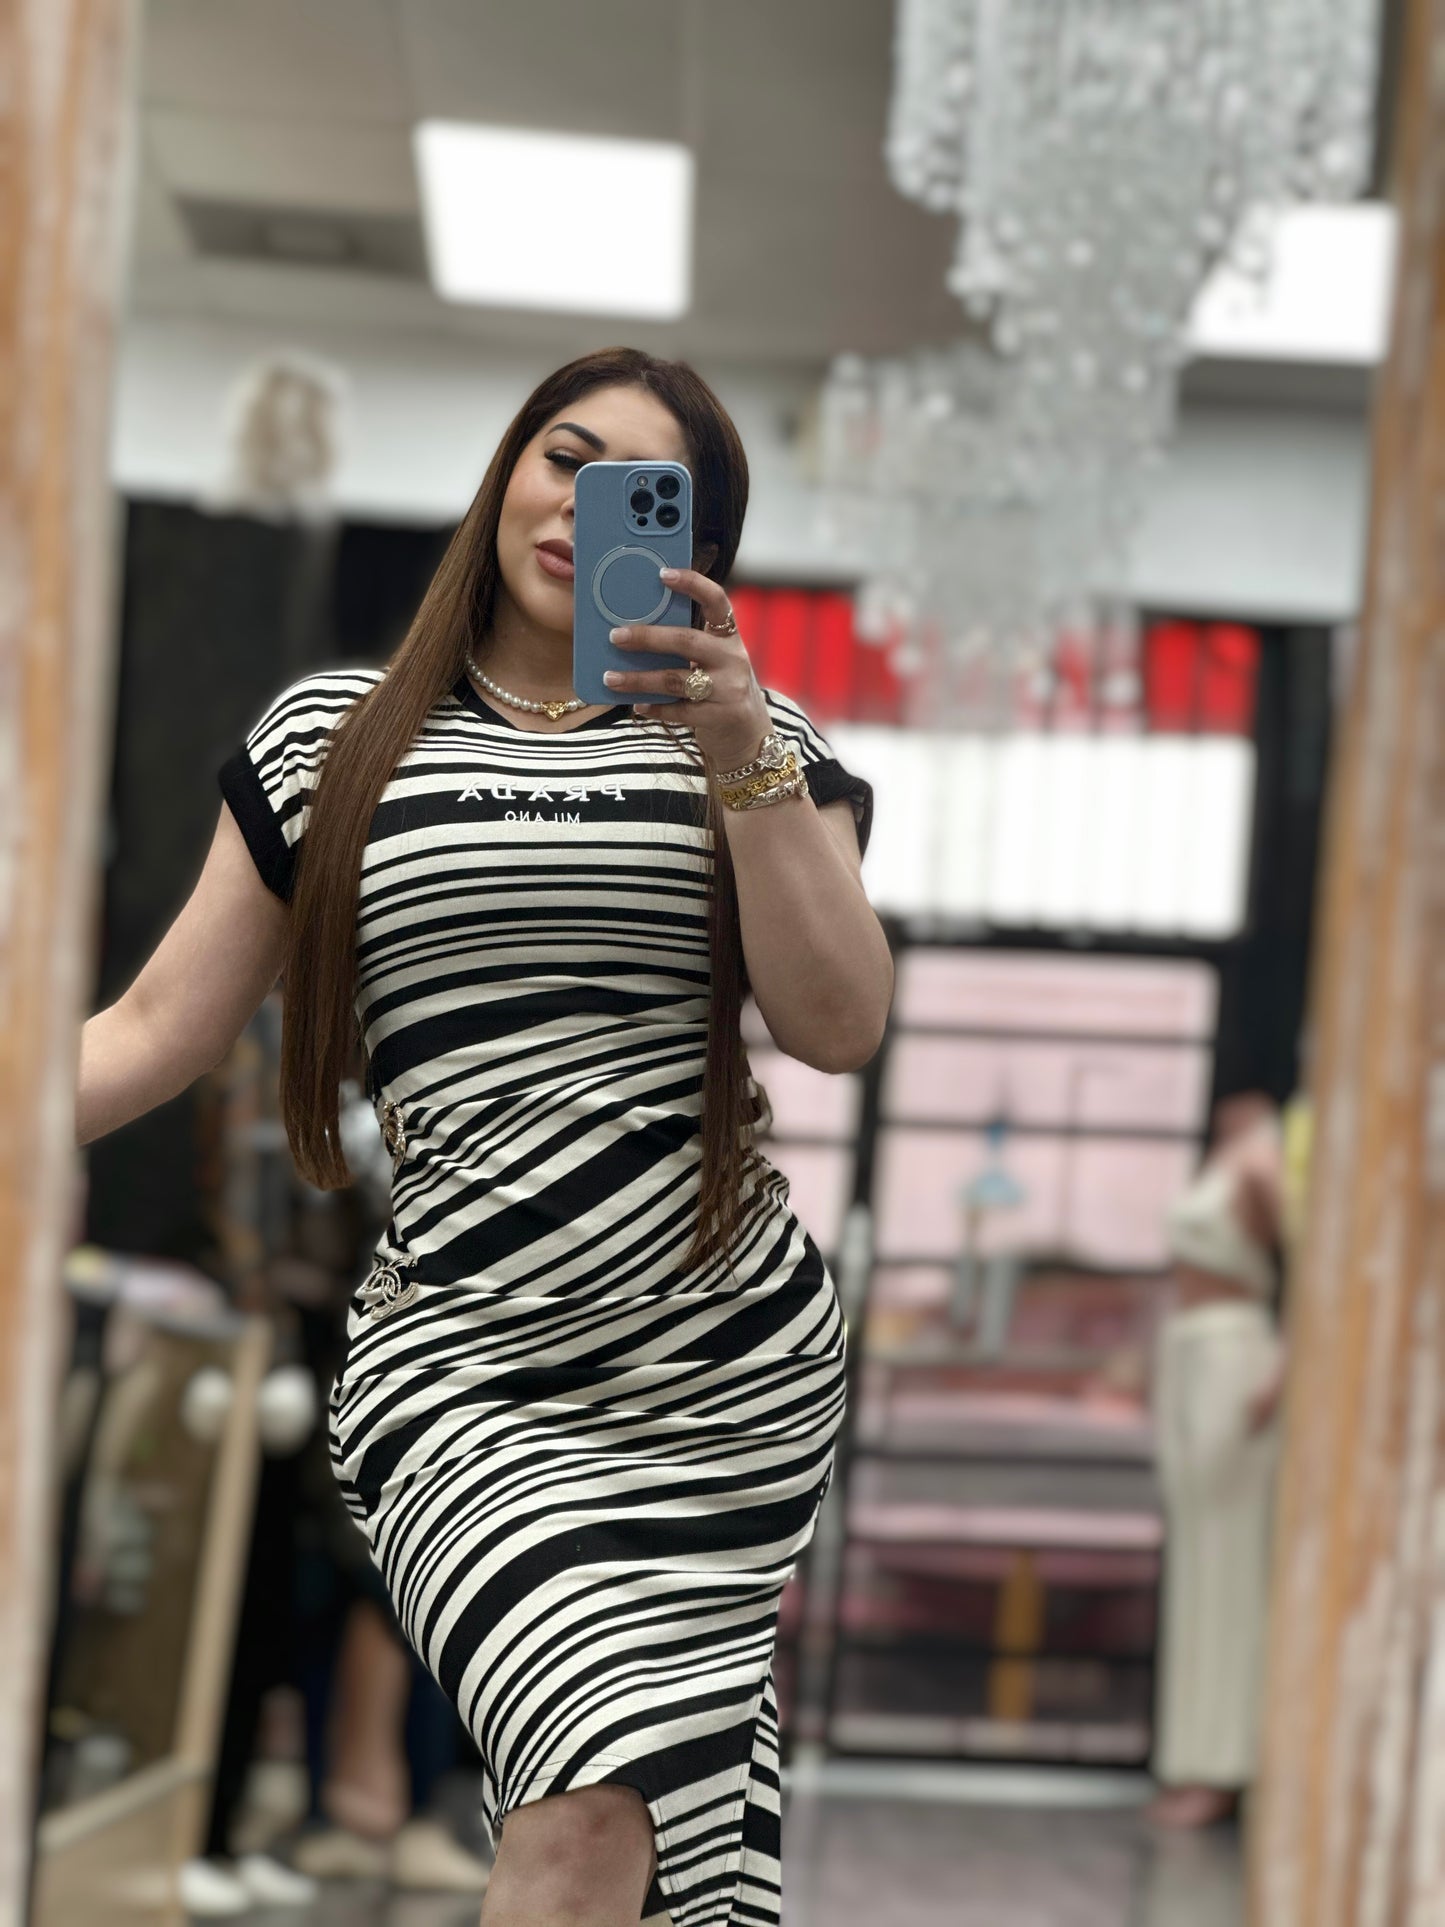 Zebra dress